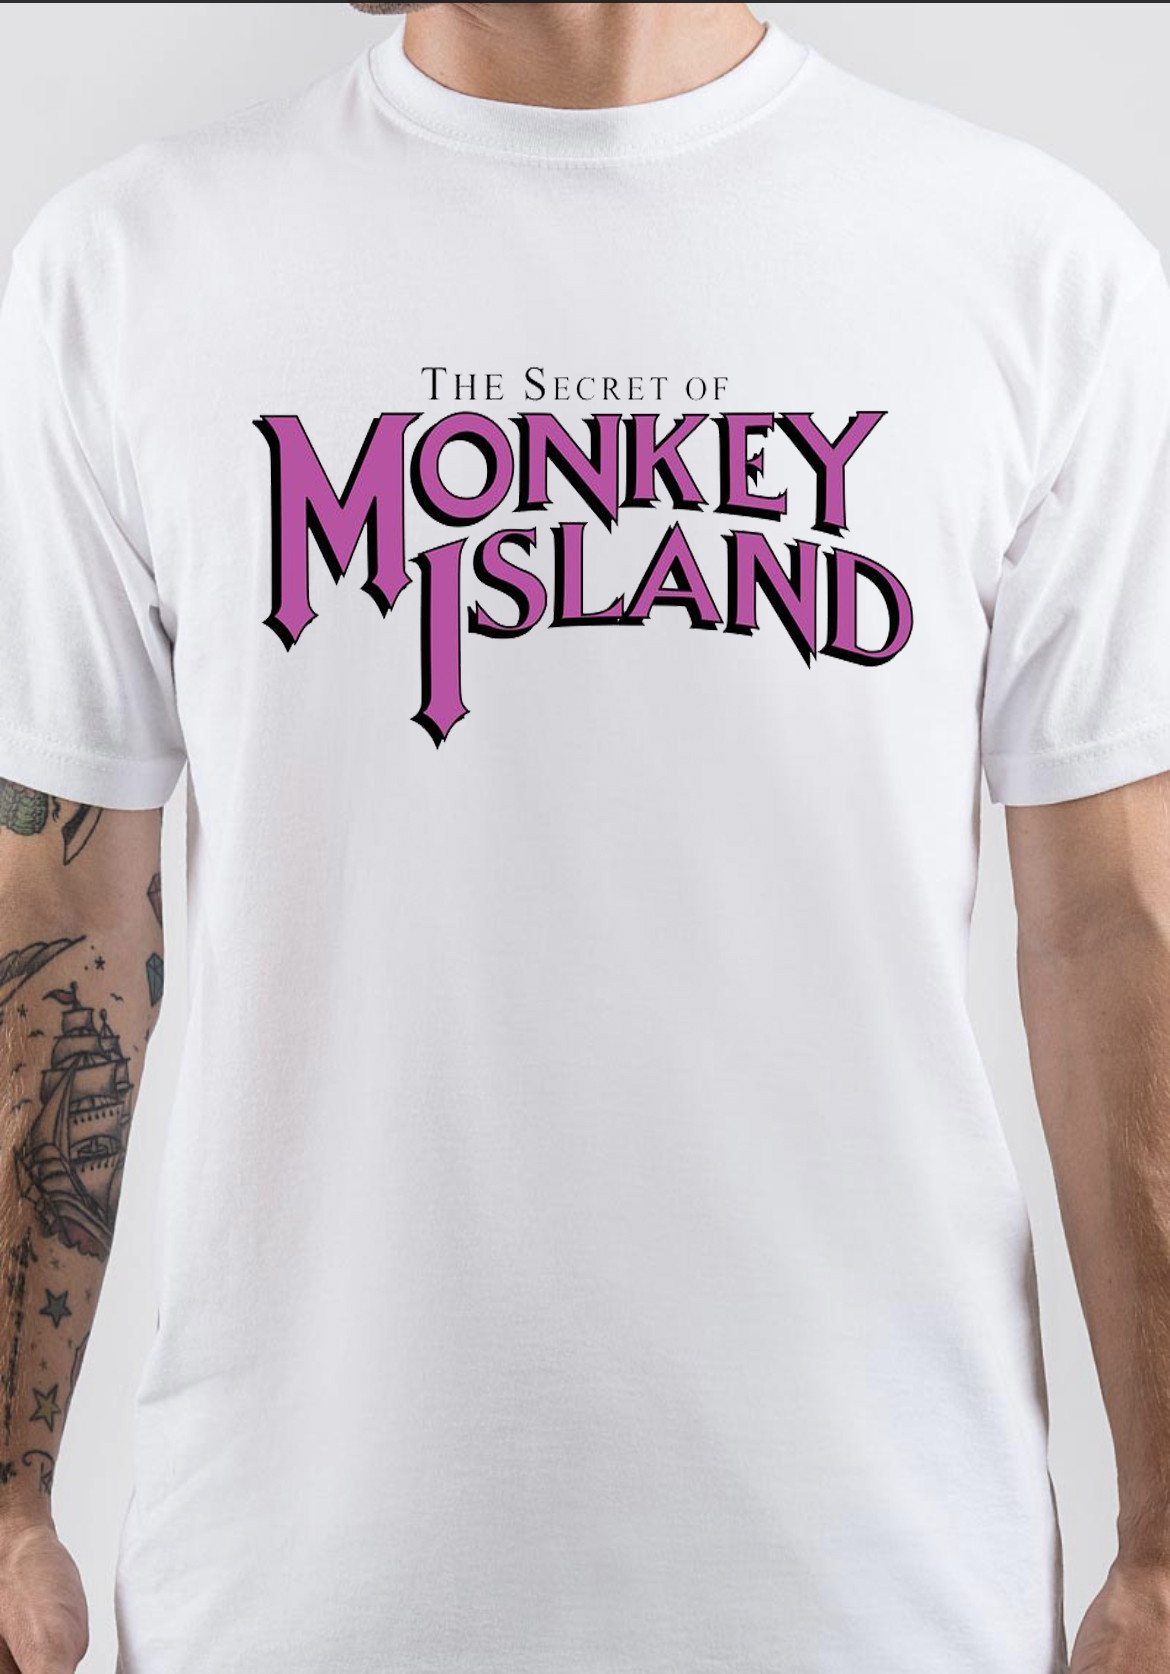 Monkey Island T-Shirt And Merchandise